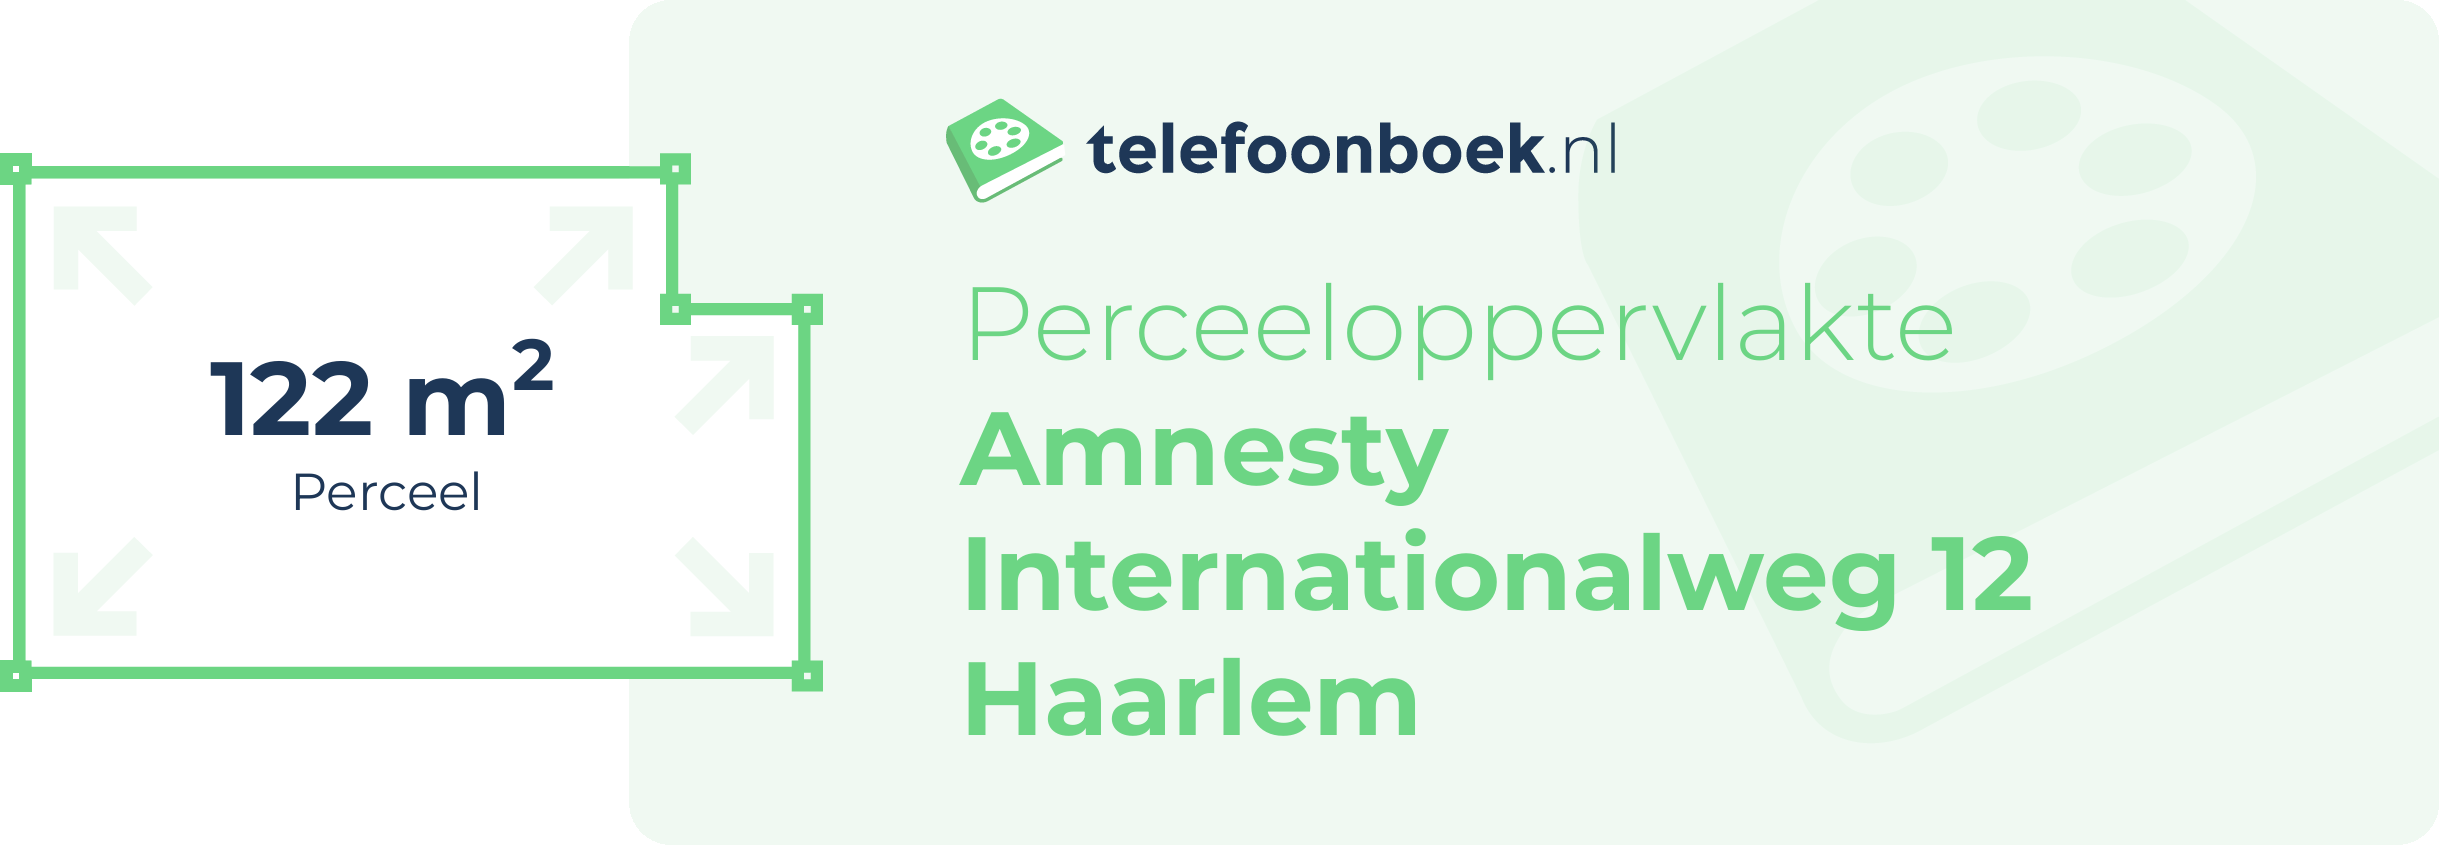 Perceeloppervlakte Amnesty Internationalweg 12 Haarlem